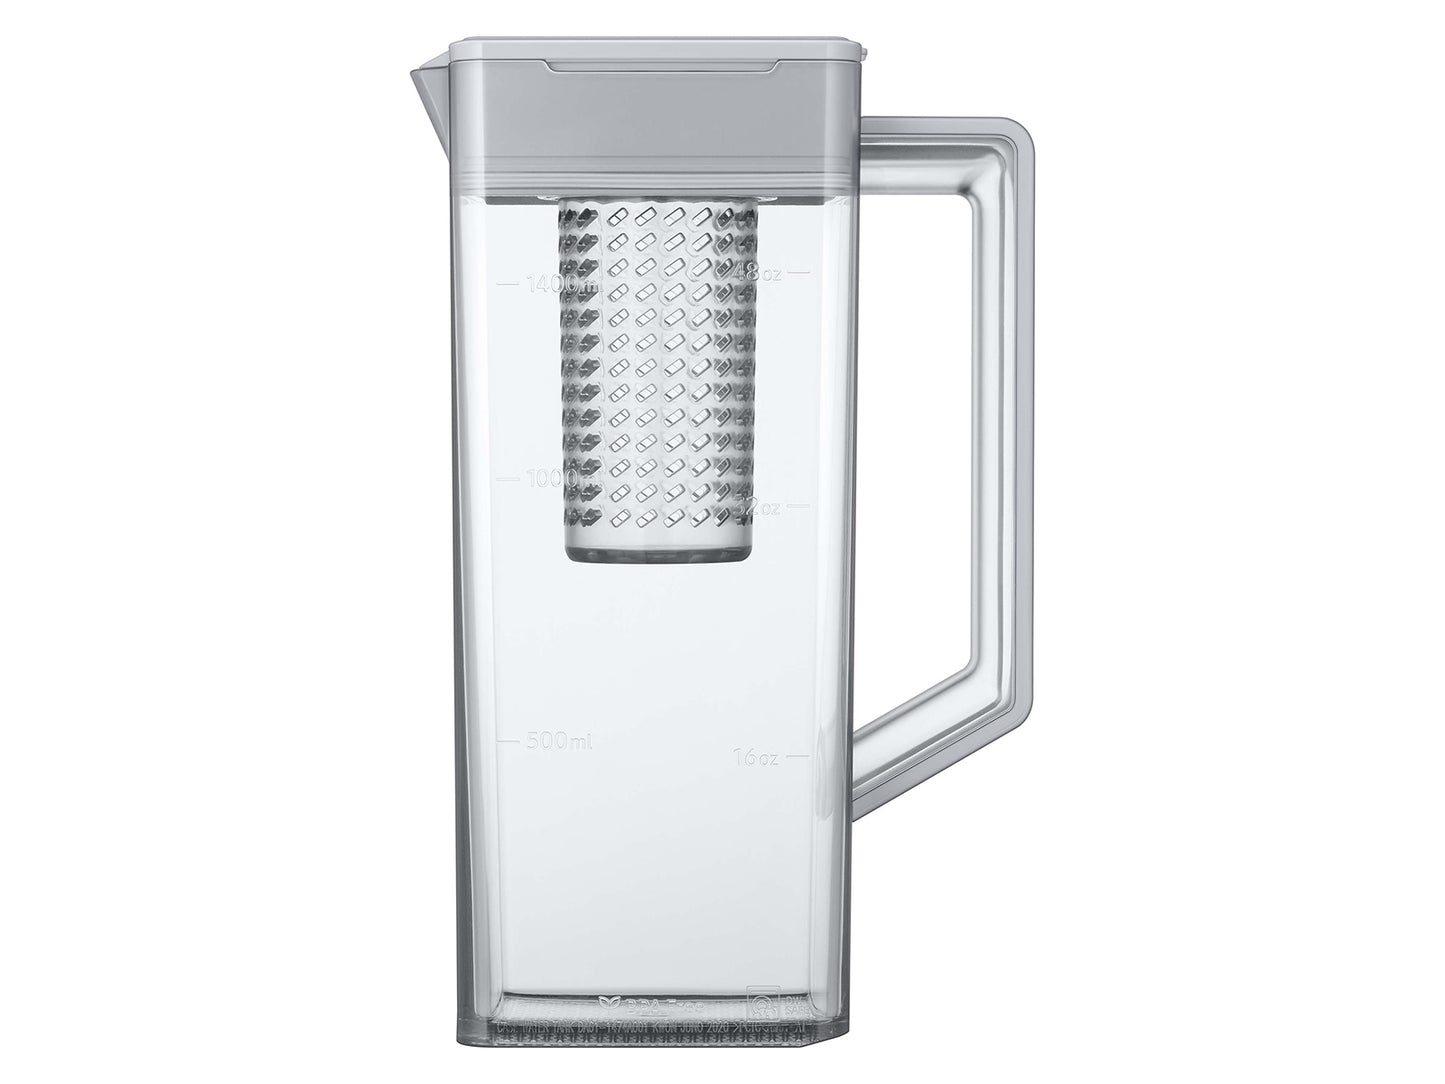 Samsung Bespoke 3-Door French Door Refrigerator (30 cu. ft.) with AutoFill Water Pitcher in Stainless Steel